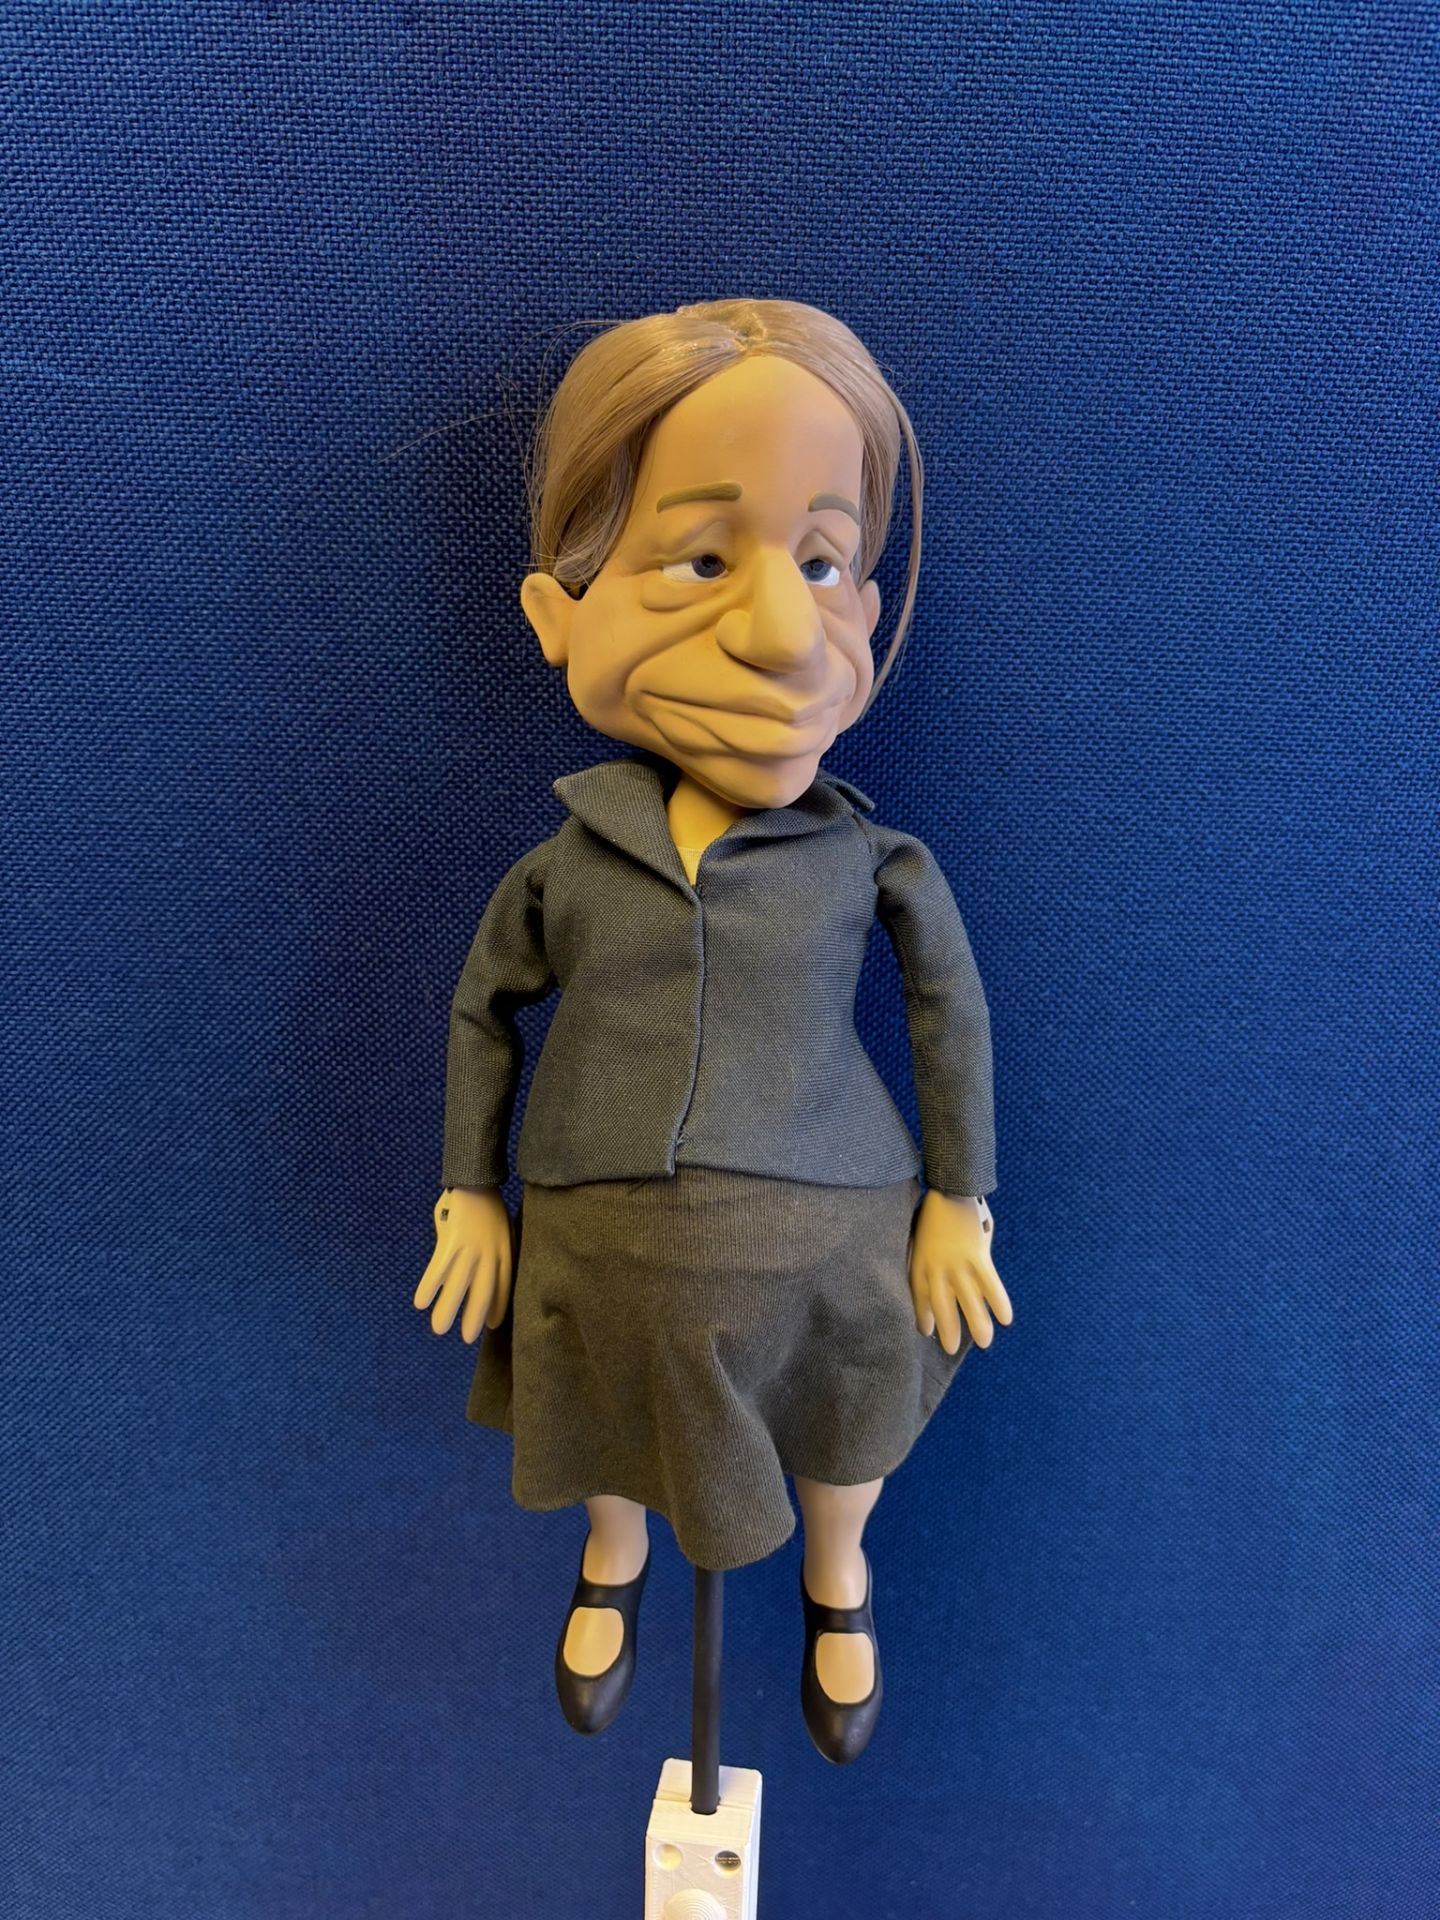 Newzoid puppet - Natalie Bennett - Image 2 of 3